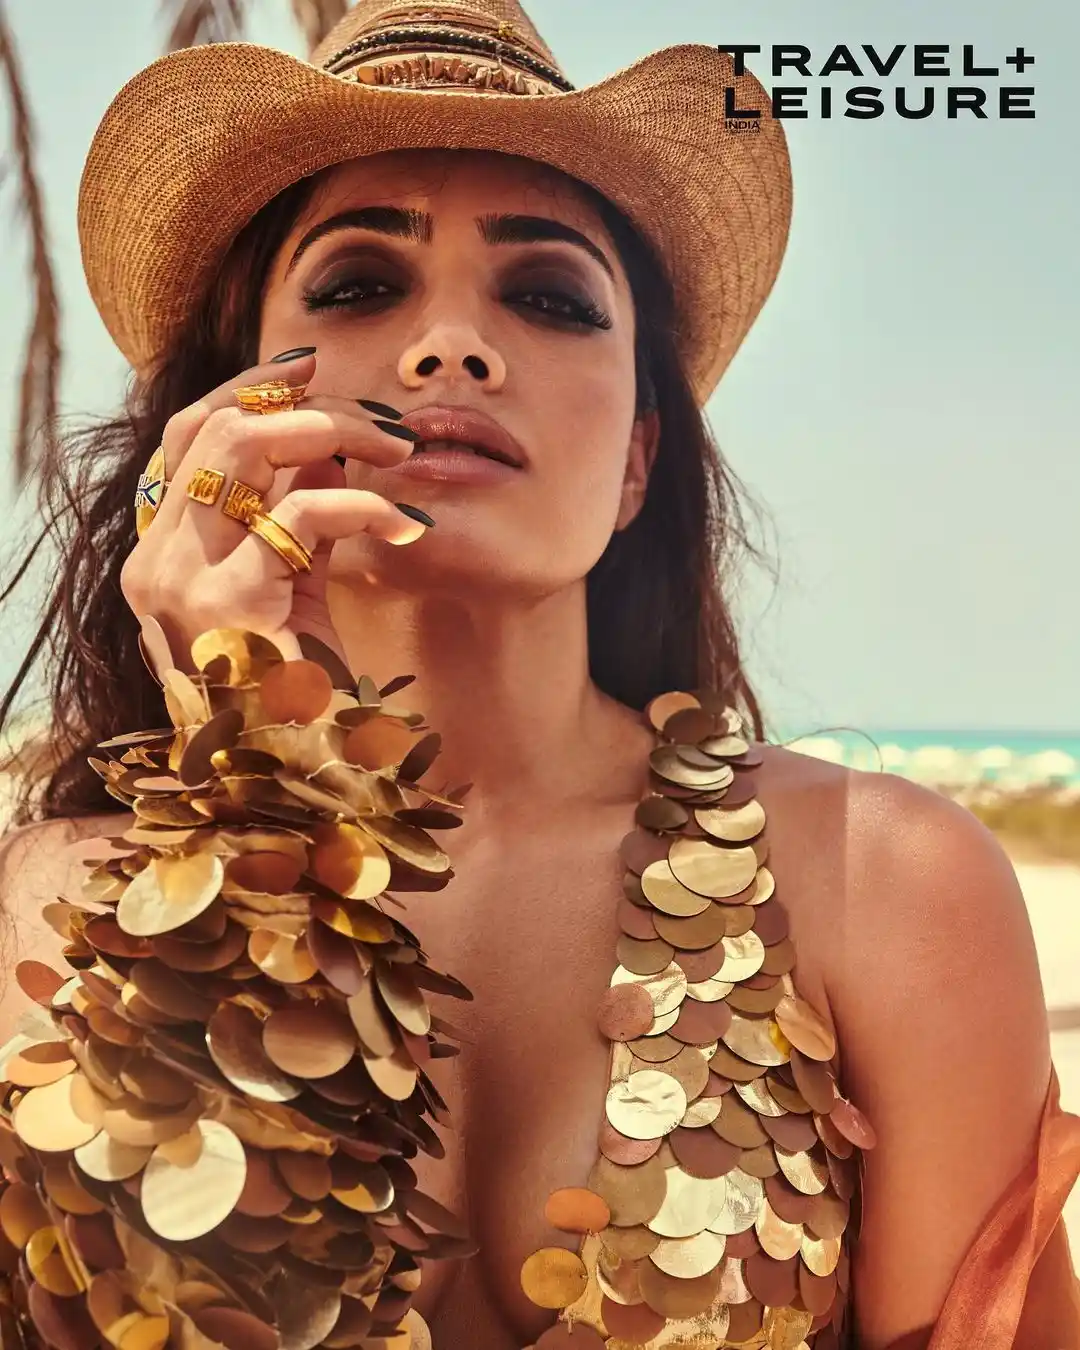 Rashmika Mandanna Special Photoshoot in Dubai for an Ad